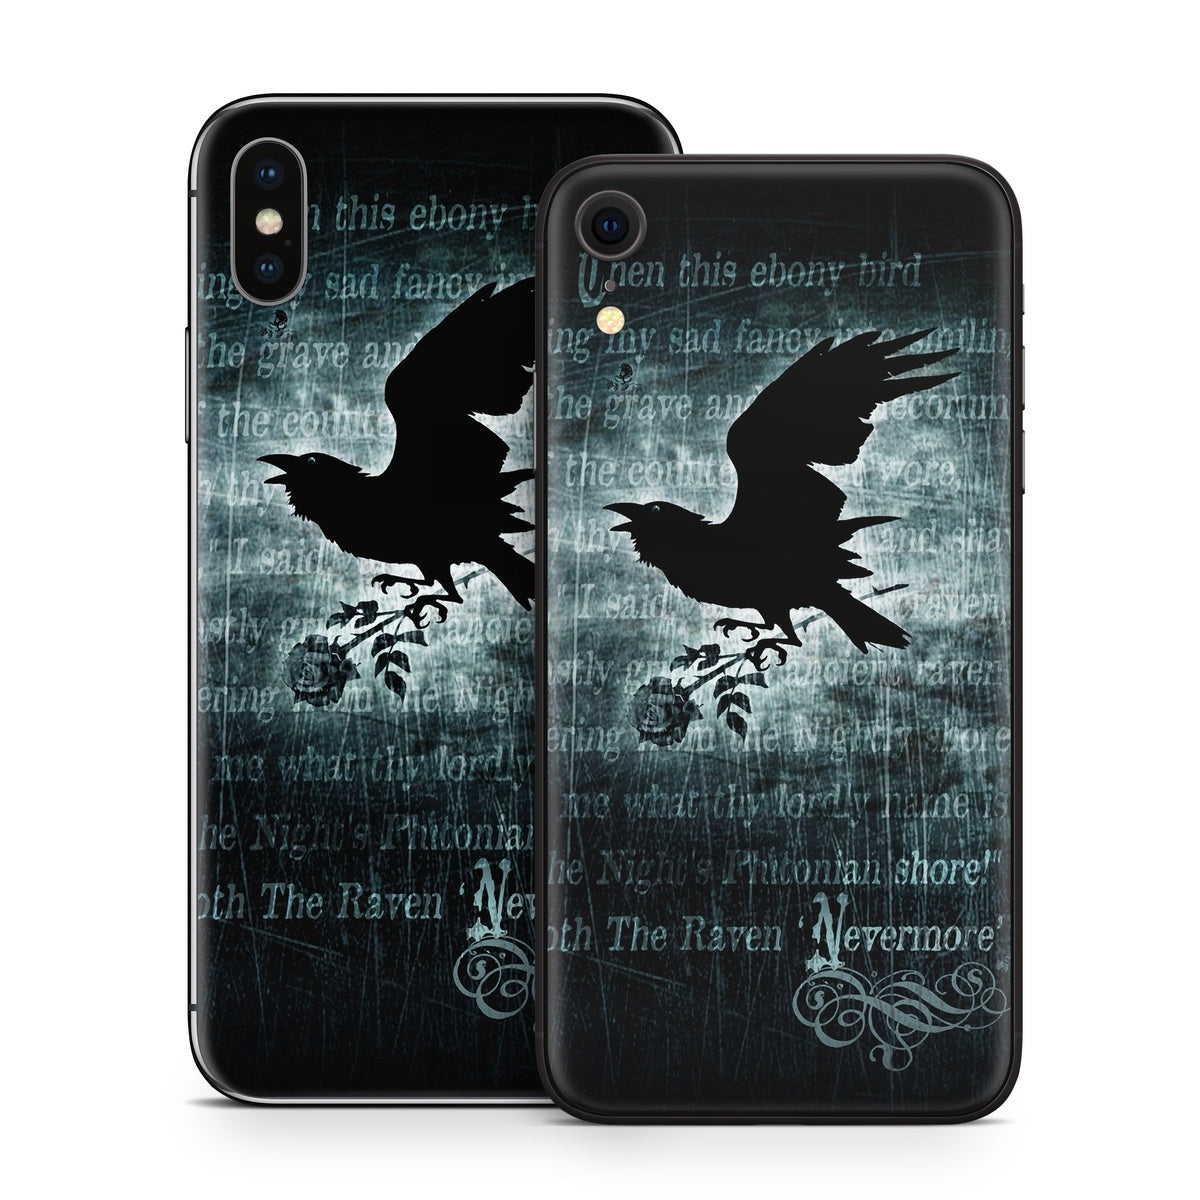 Nevermore - Apple iPhone X Skin